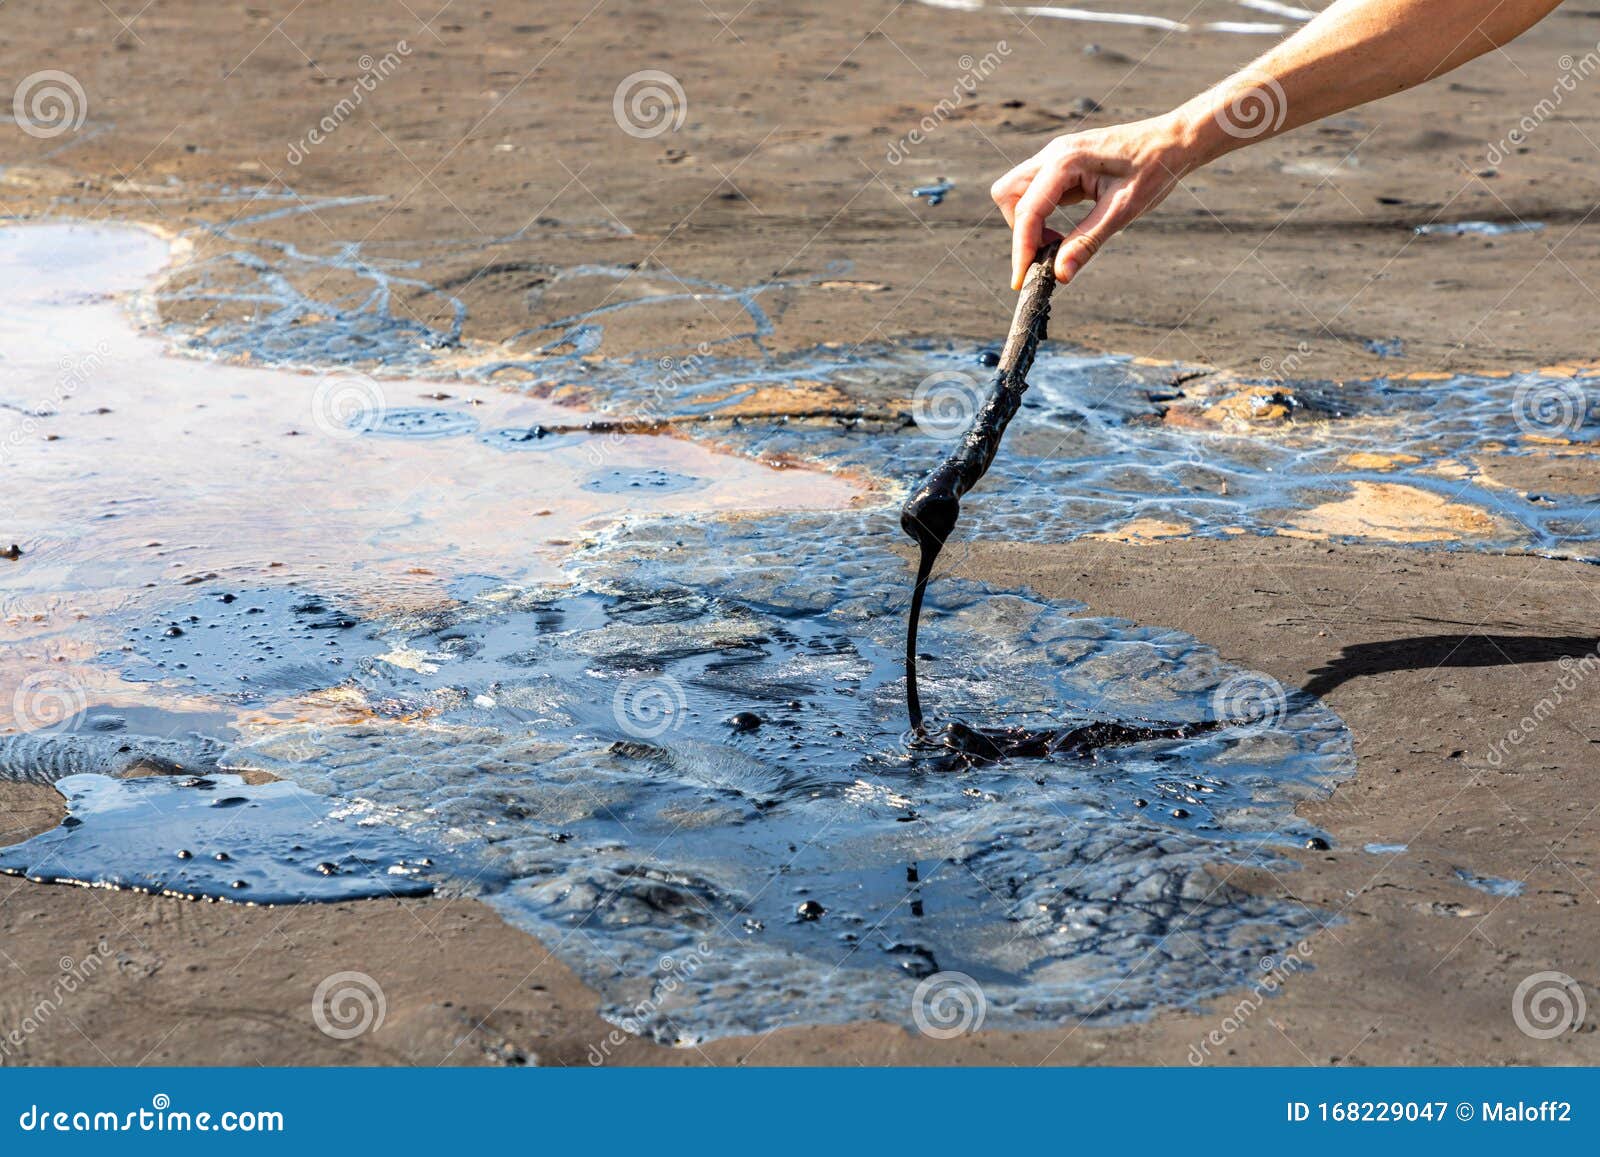 a woman`s hand stirring liquid asphalt with a wooden stick at pitch lake, la brea, trinidad island, trinidad and tobago